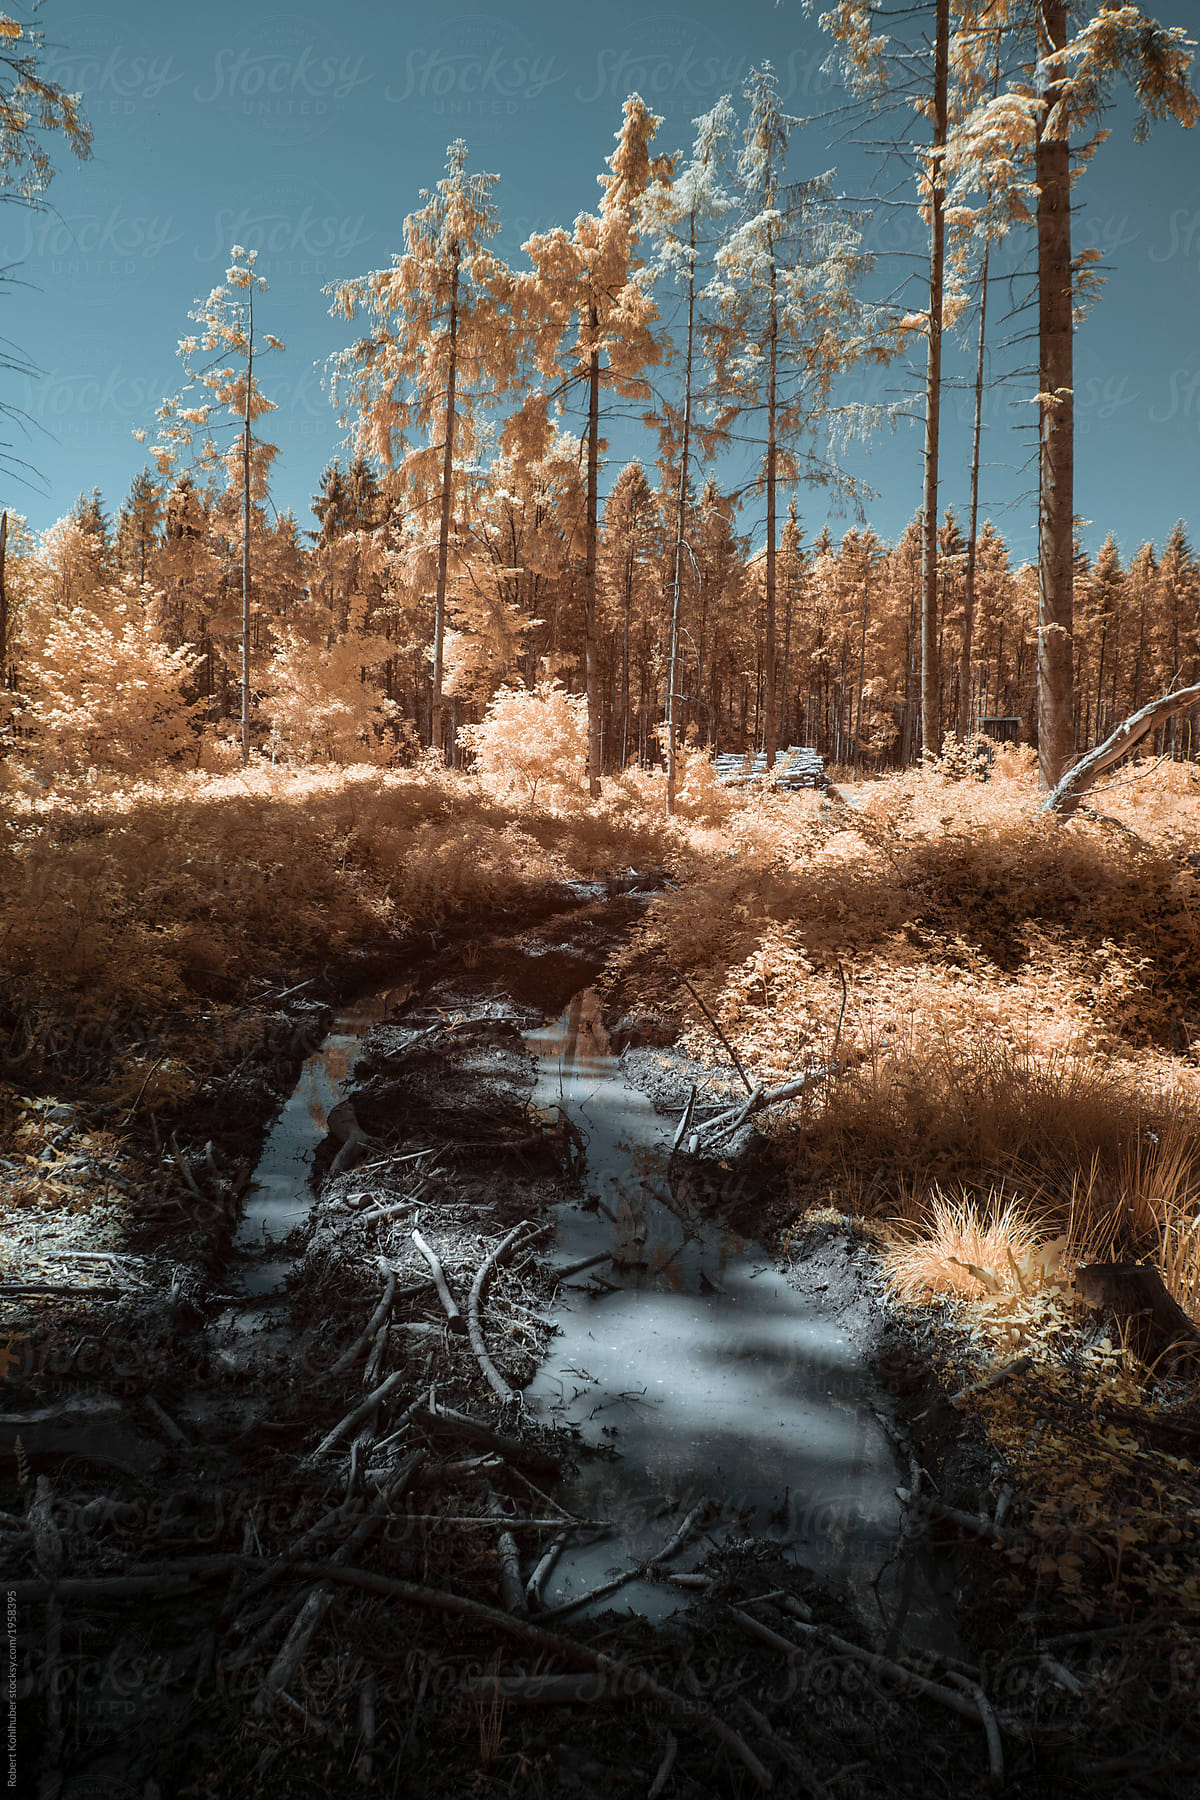 Rural forest during spring in austria, shot in Infrared IR